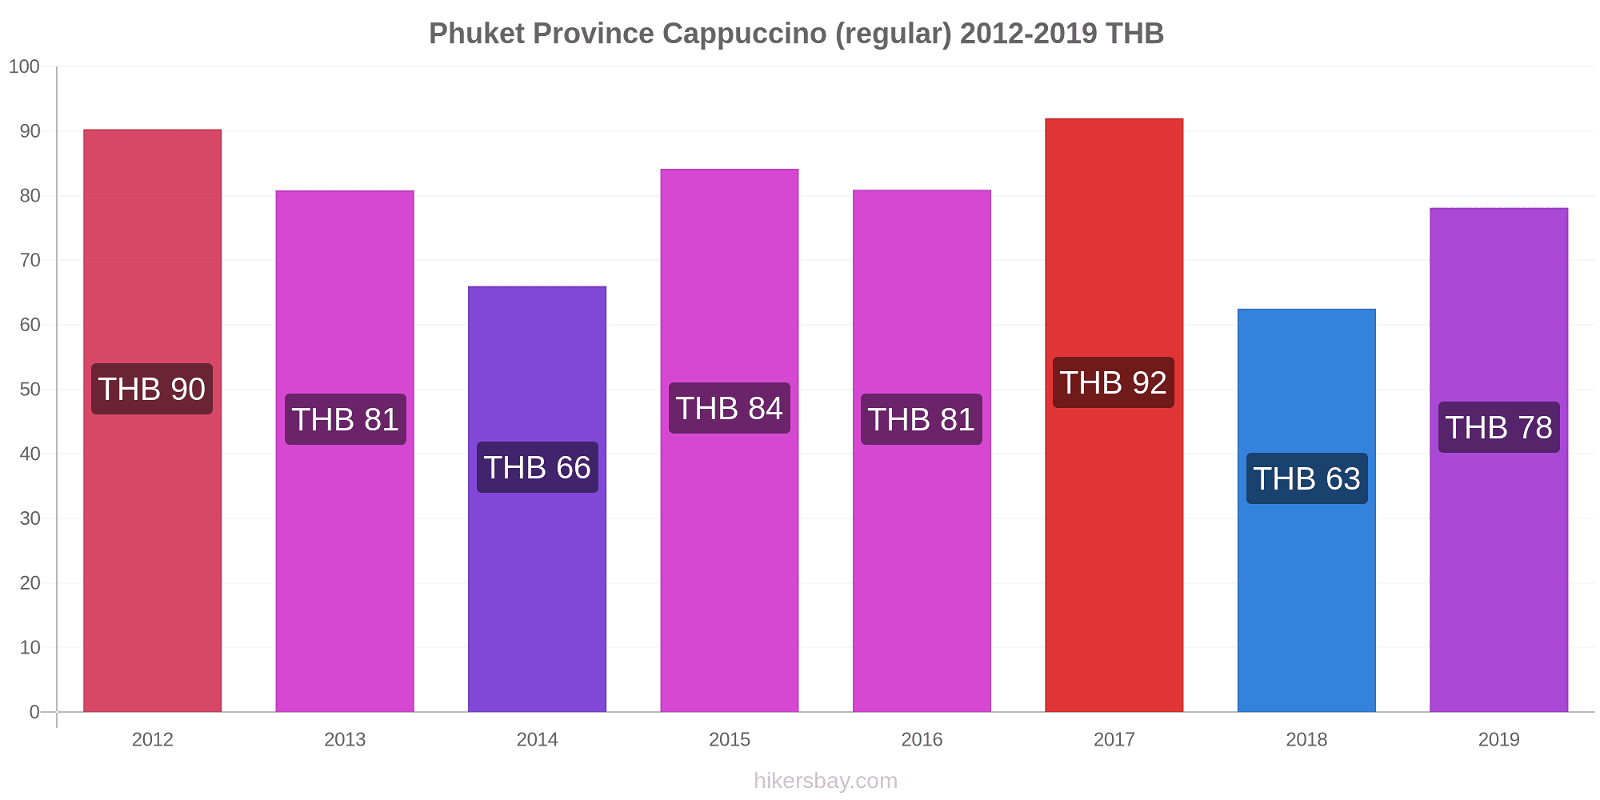 Phuket Province price changes Cappuccino (regular) hikersbay.com